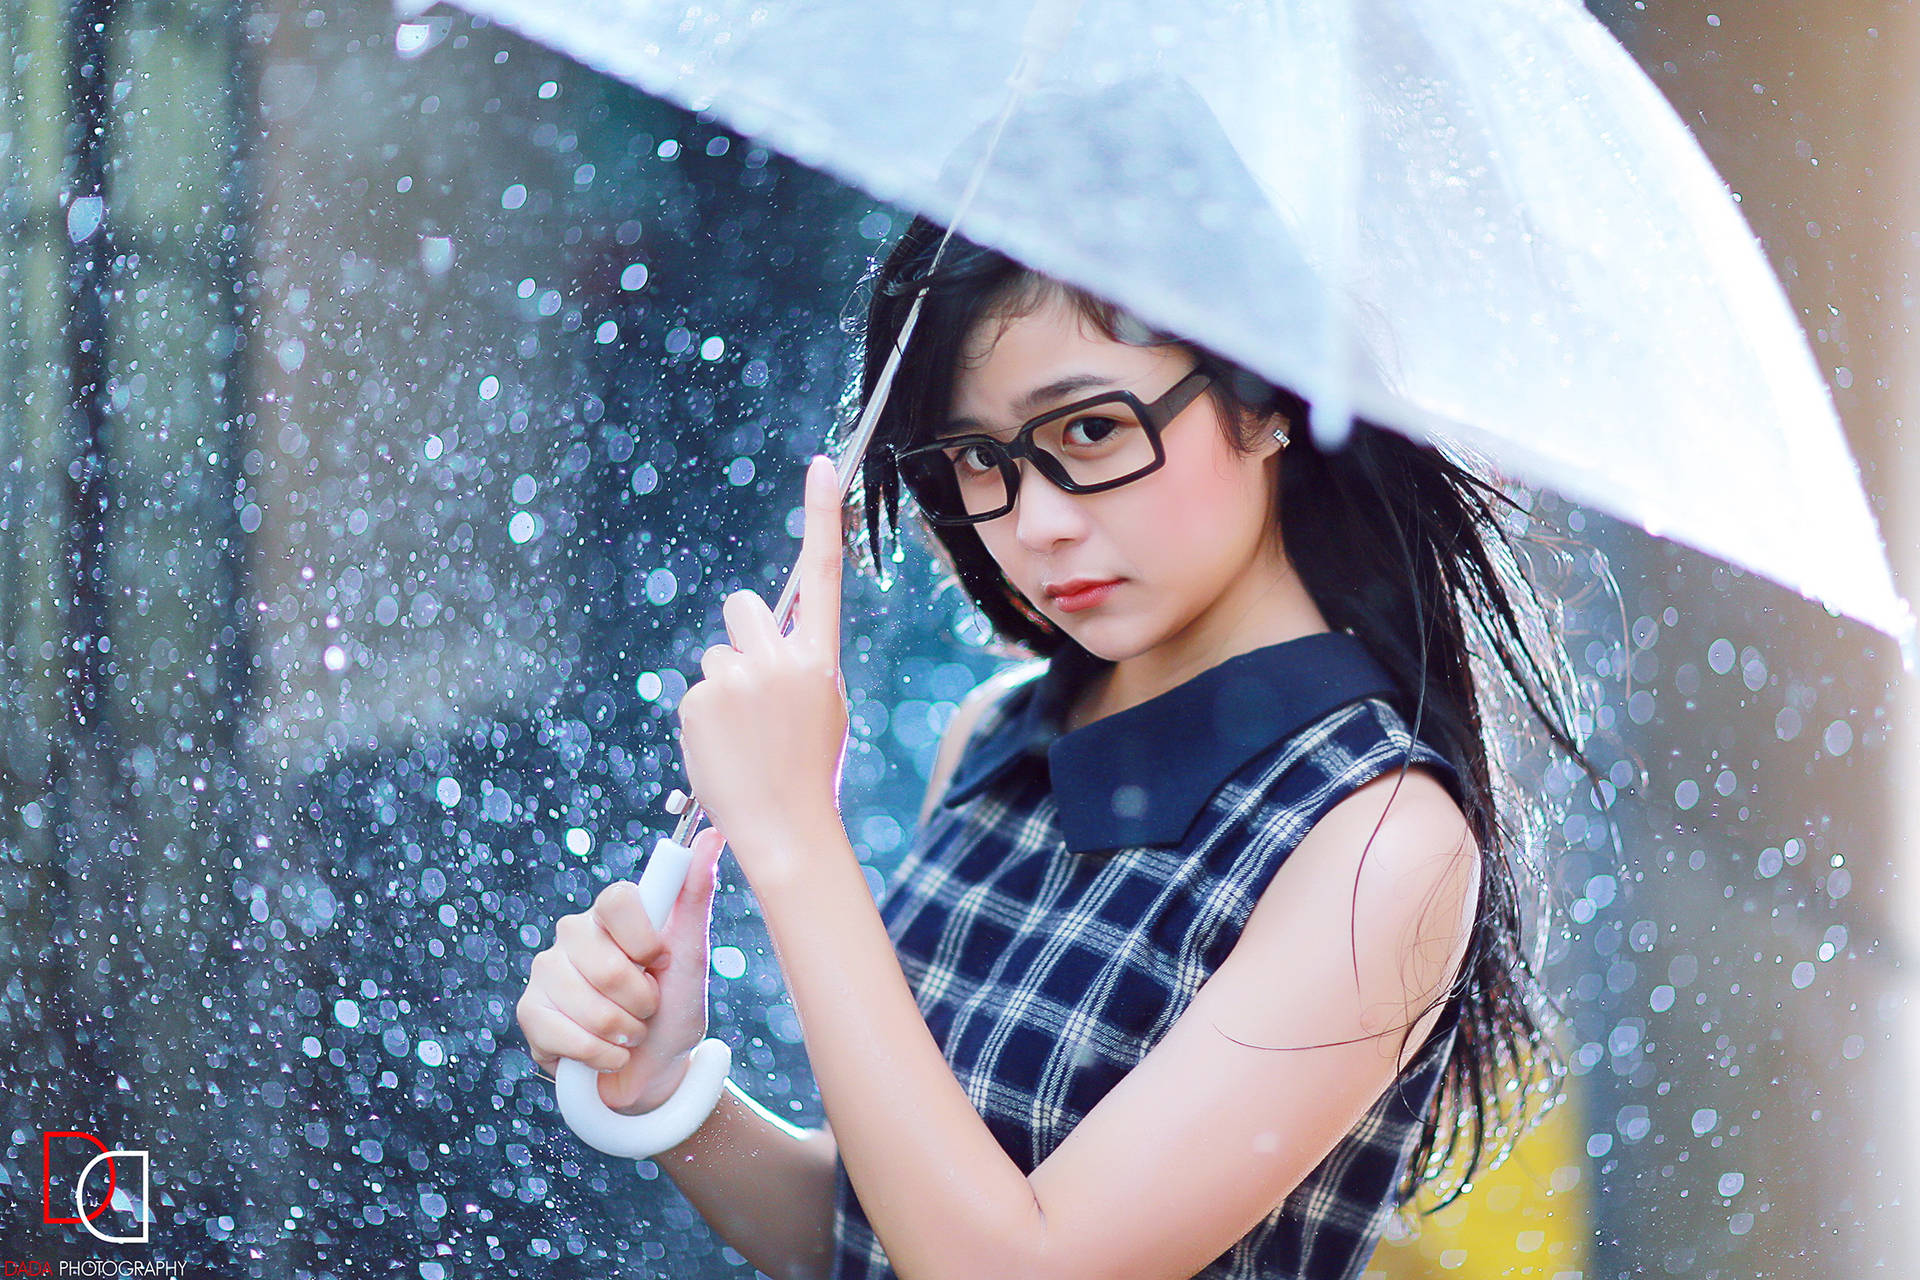 Chinese Woman In Rain Wallpaper